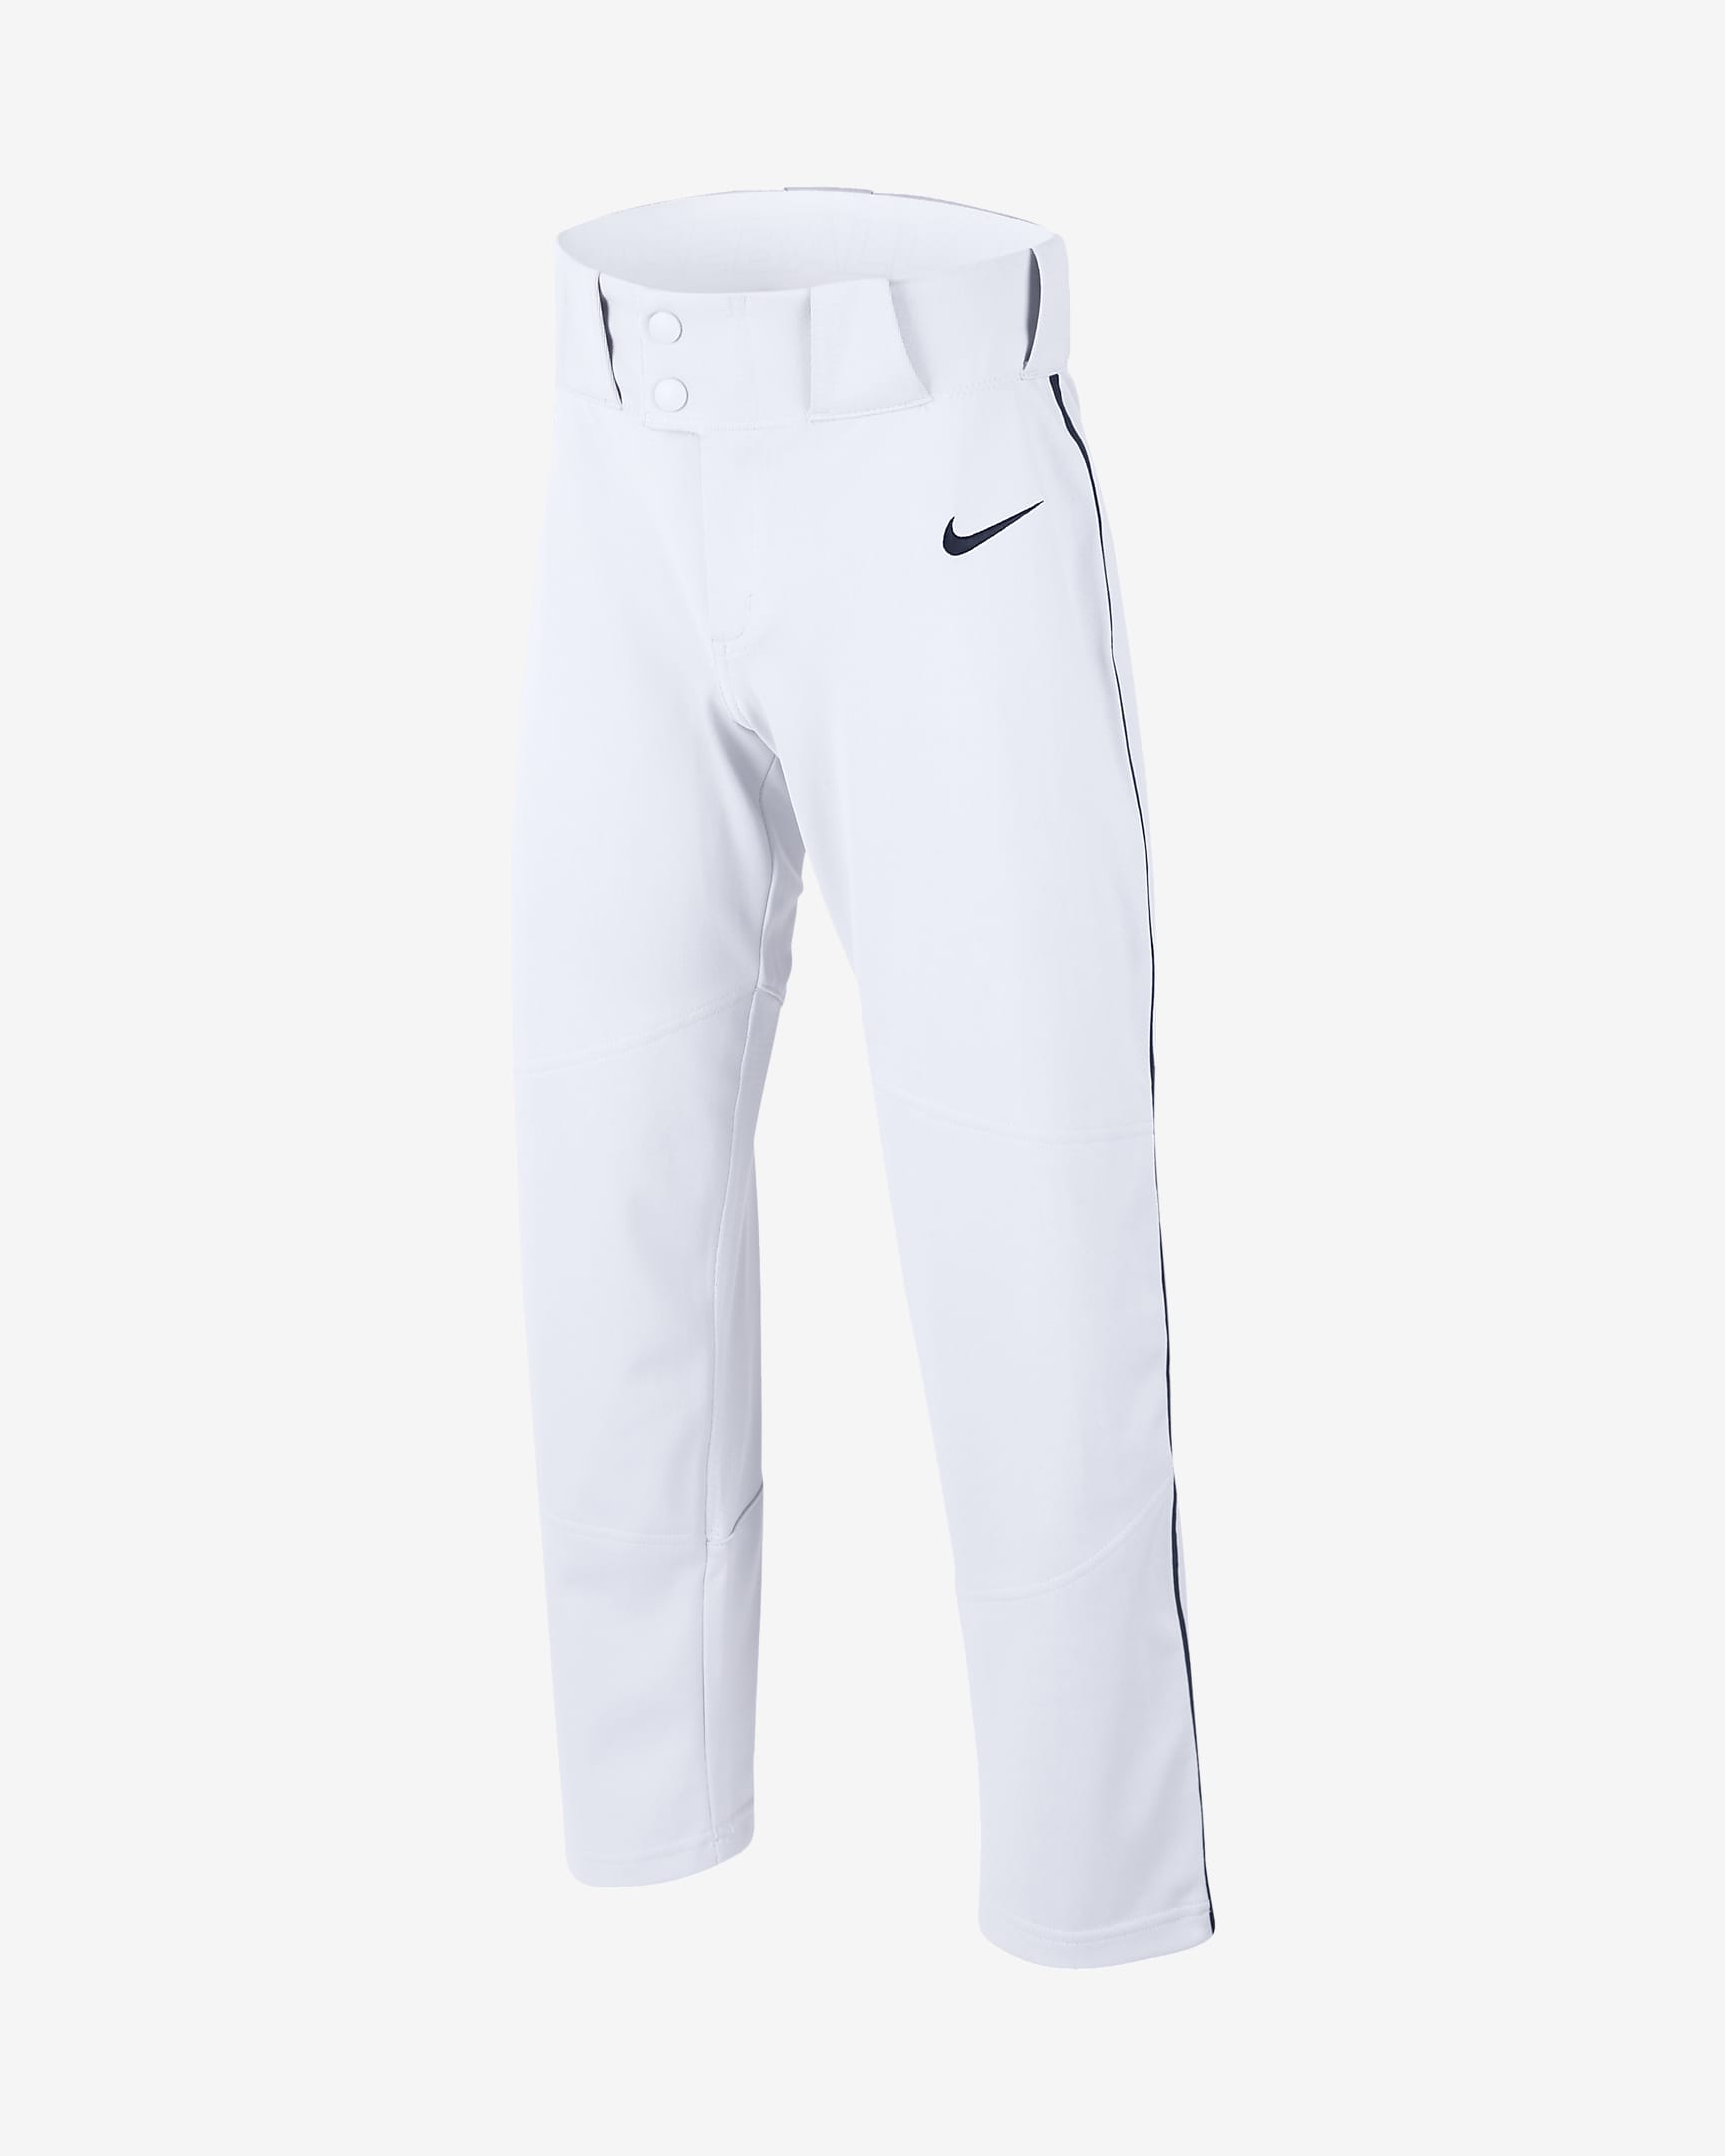 Nike Vapor Select Big Kids' (Boys') Baseball Pants. Nike.com